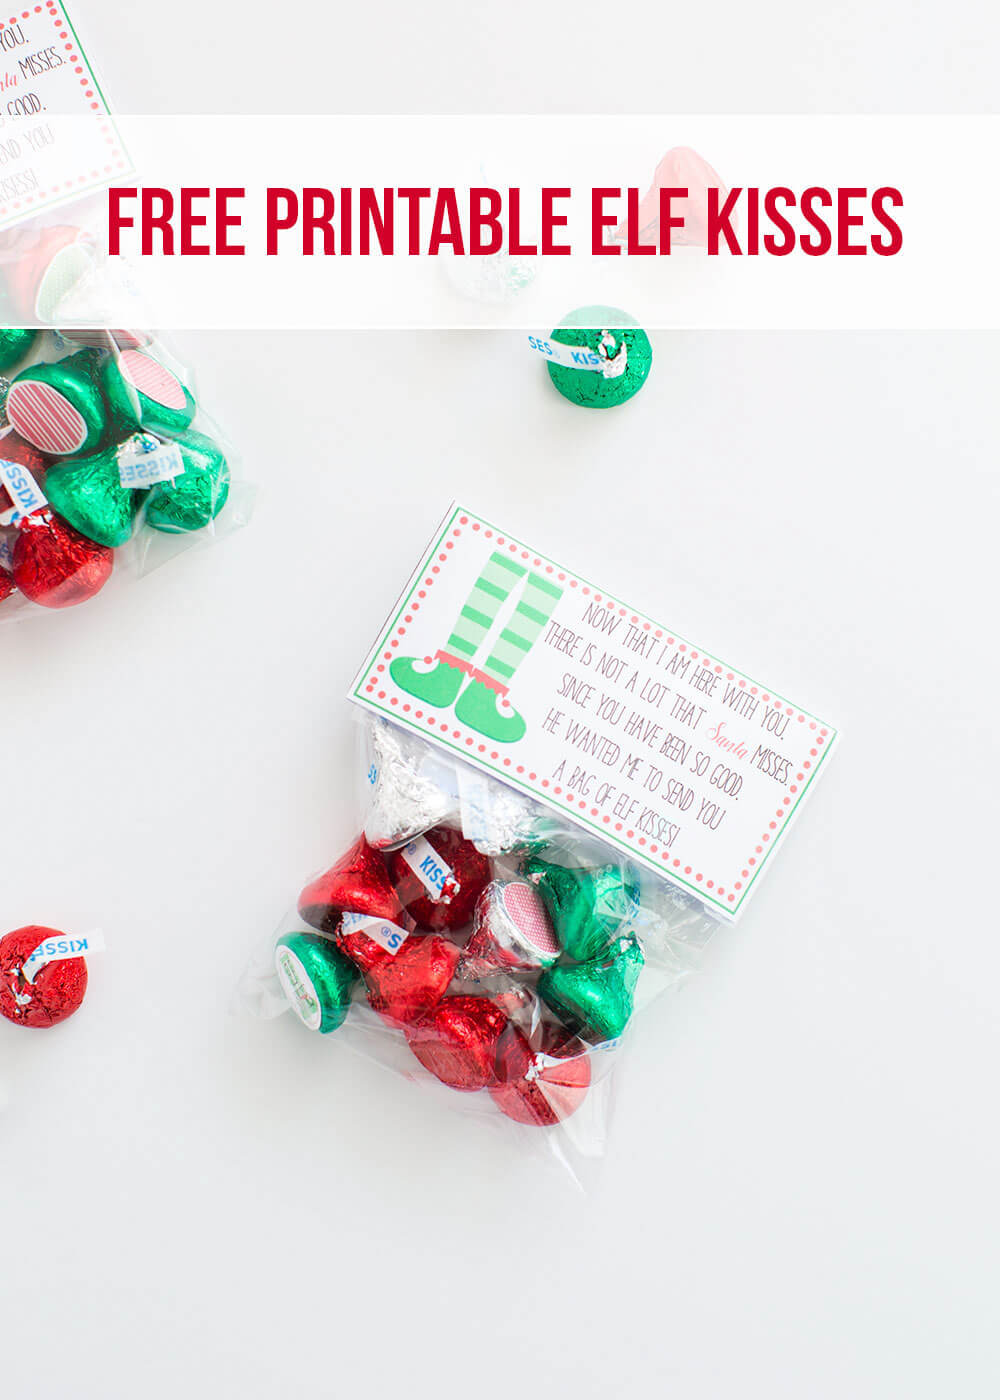 Free-printable-elf-kisses-(2)